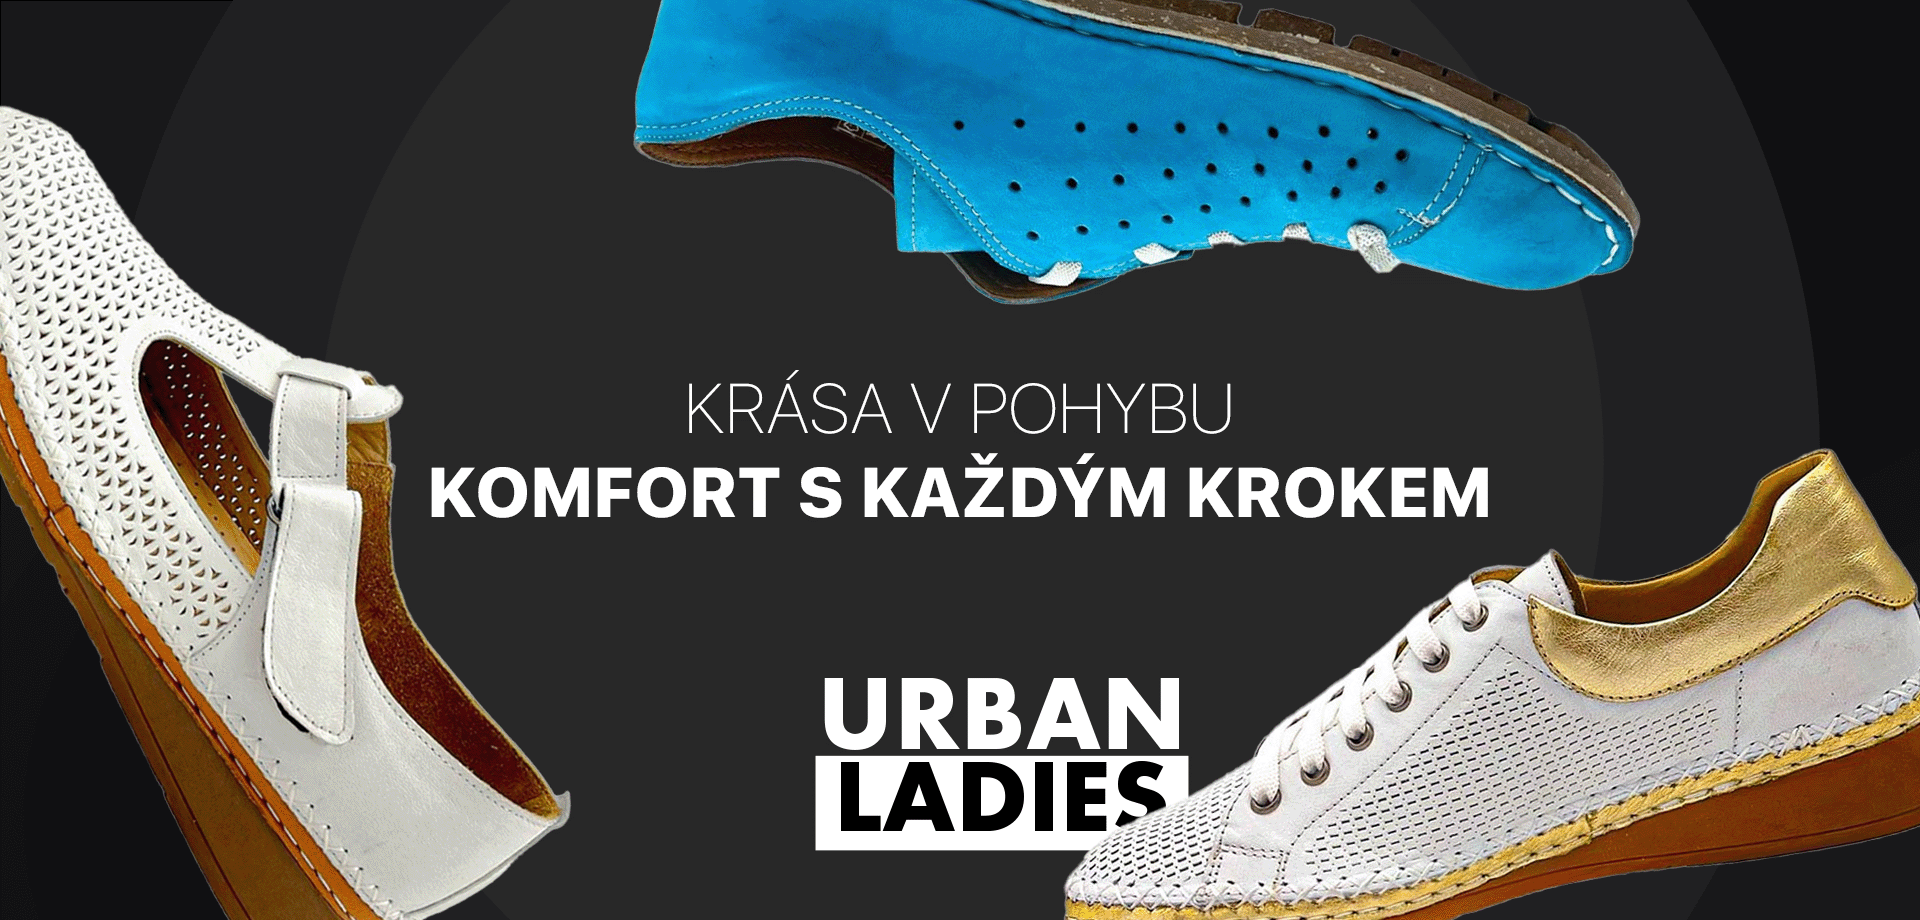 Urban Ladies - Komfort při každém kroku